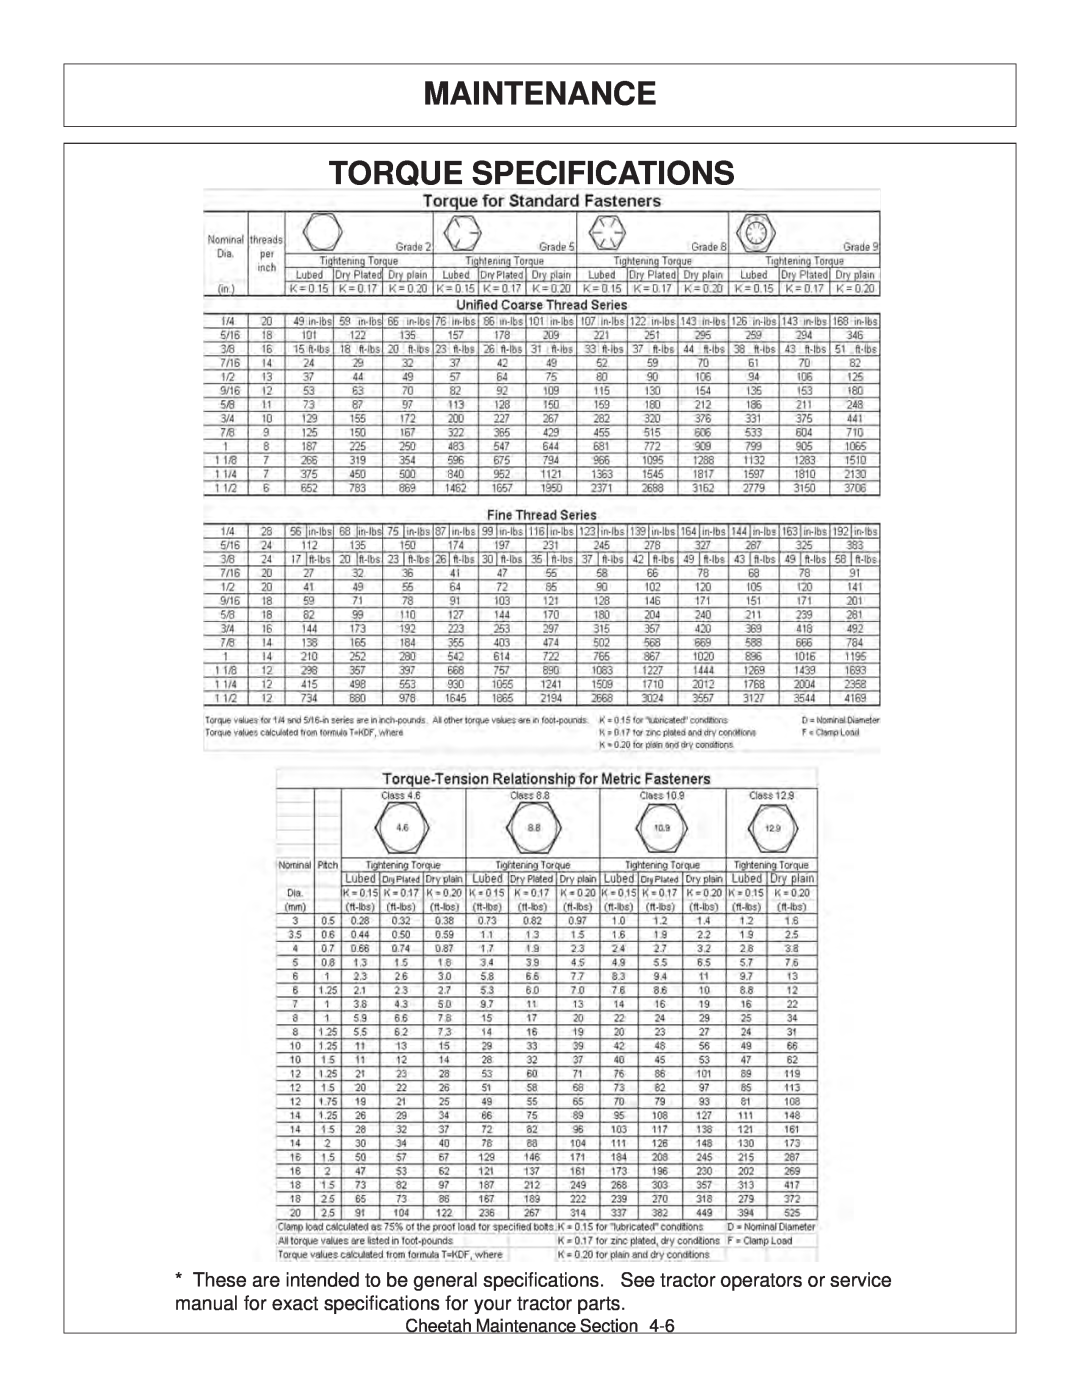 Tiger Products Co., Ltd JD 5101E, JD 5083E, JD 5093E manual Maintenance Torque Specifications 